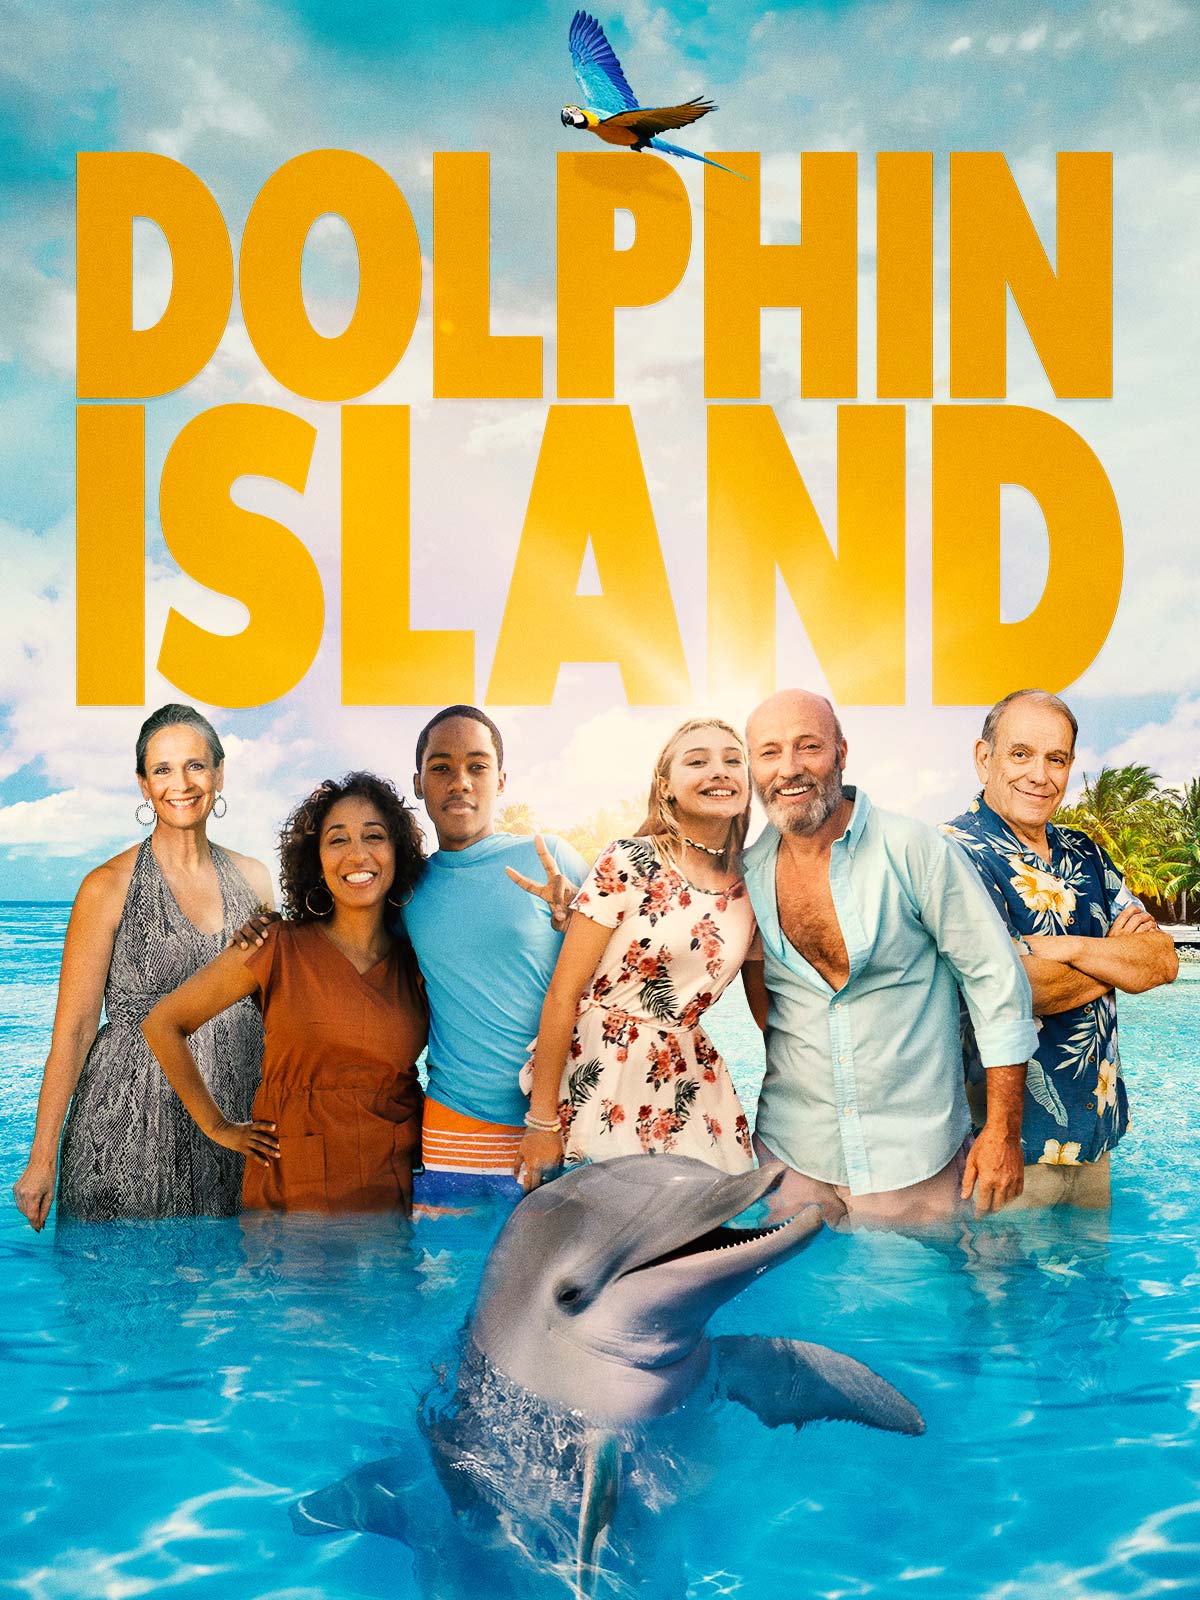 Stiahni si Filmy CZ/SK dabing Ostrov delfinu / Dolphin Island (2021)(CZ) [1080p]